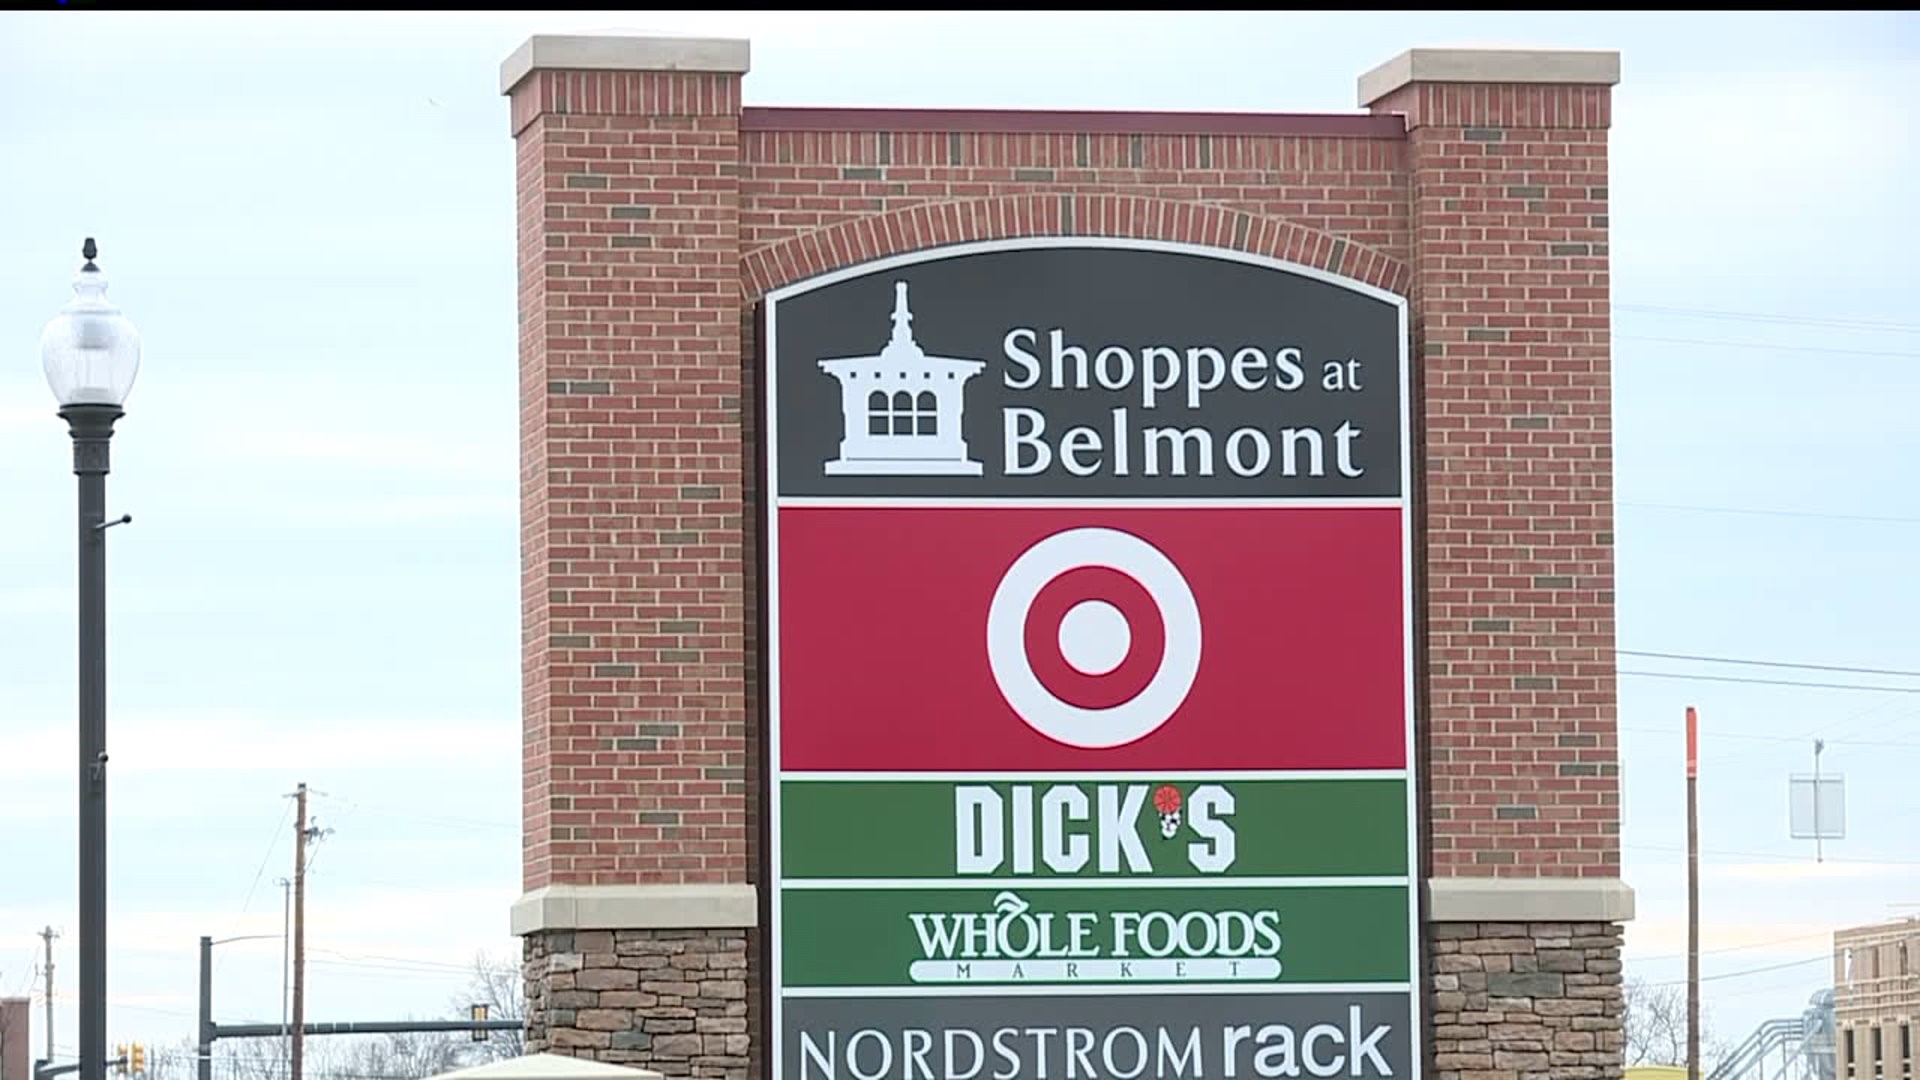 Nordstrom Rack – Shoppes at Belmont